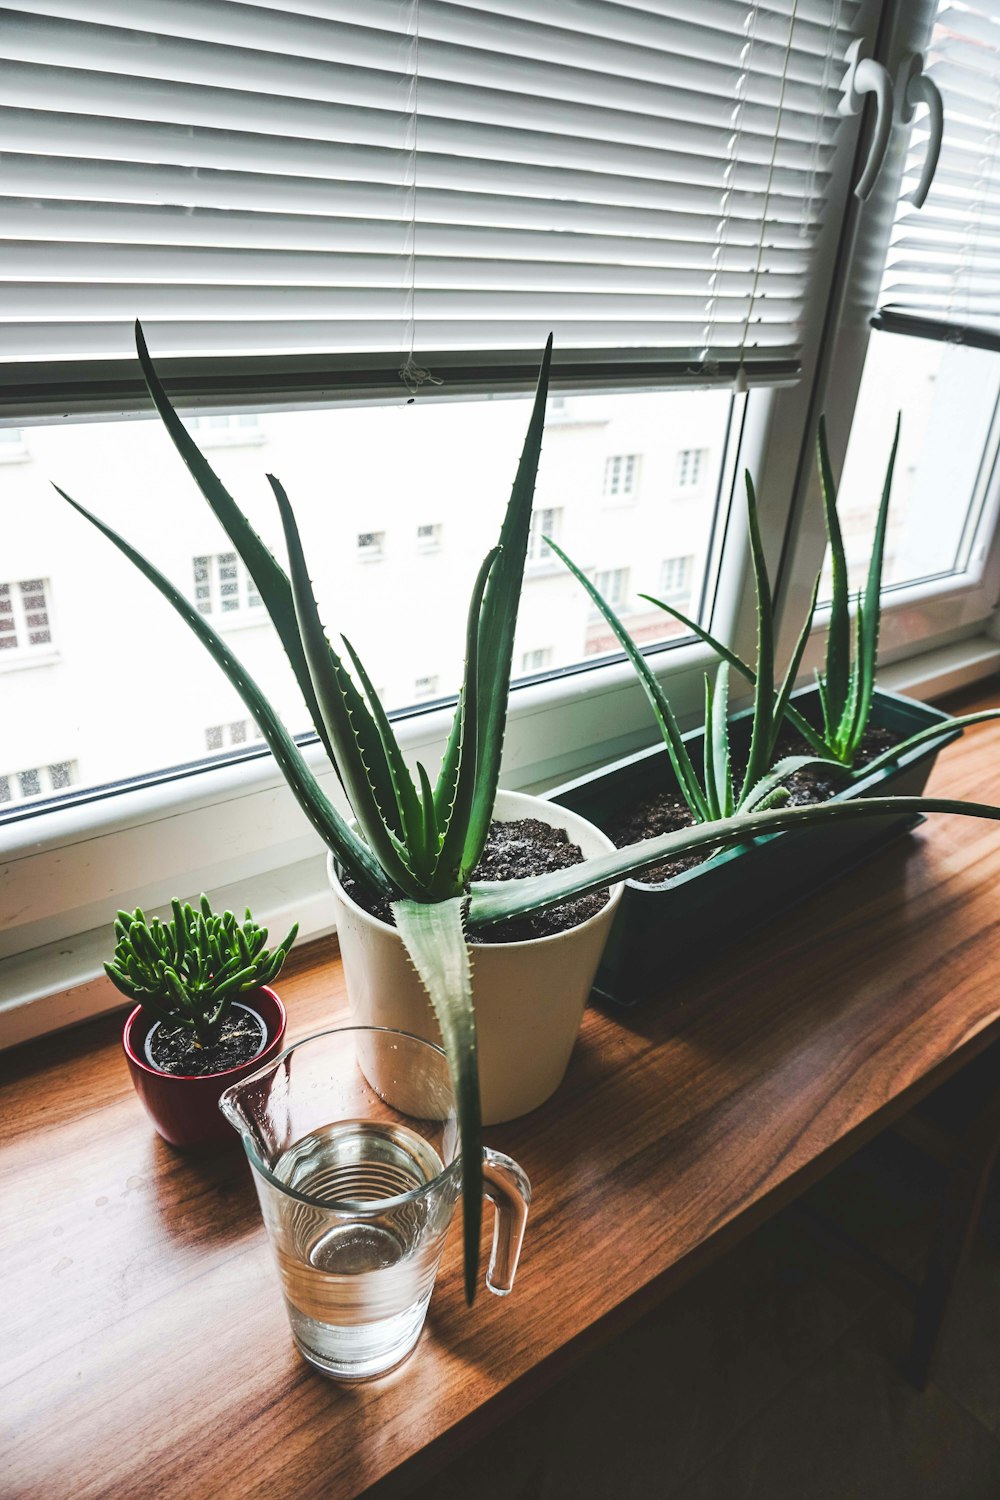 clear glass mug beside Aloe vera plants on window